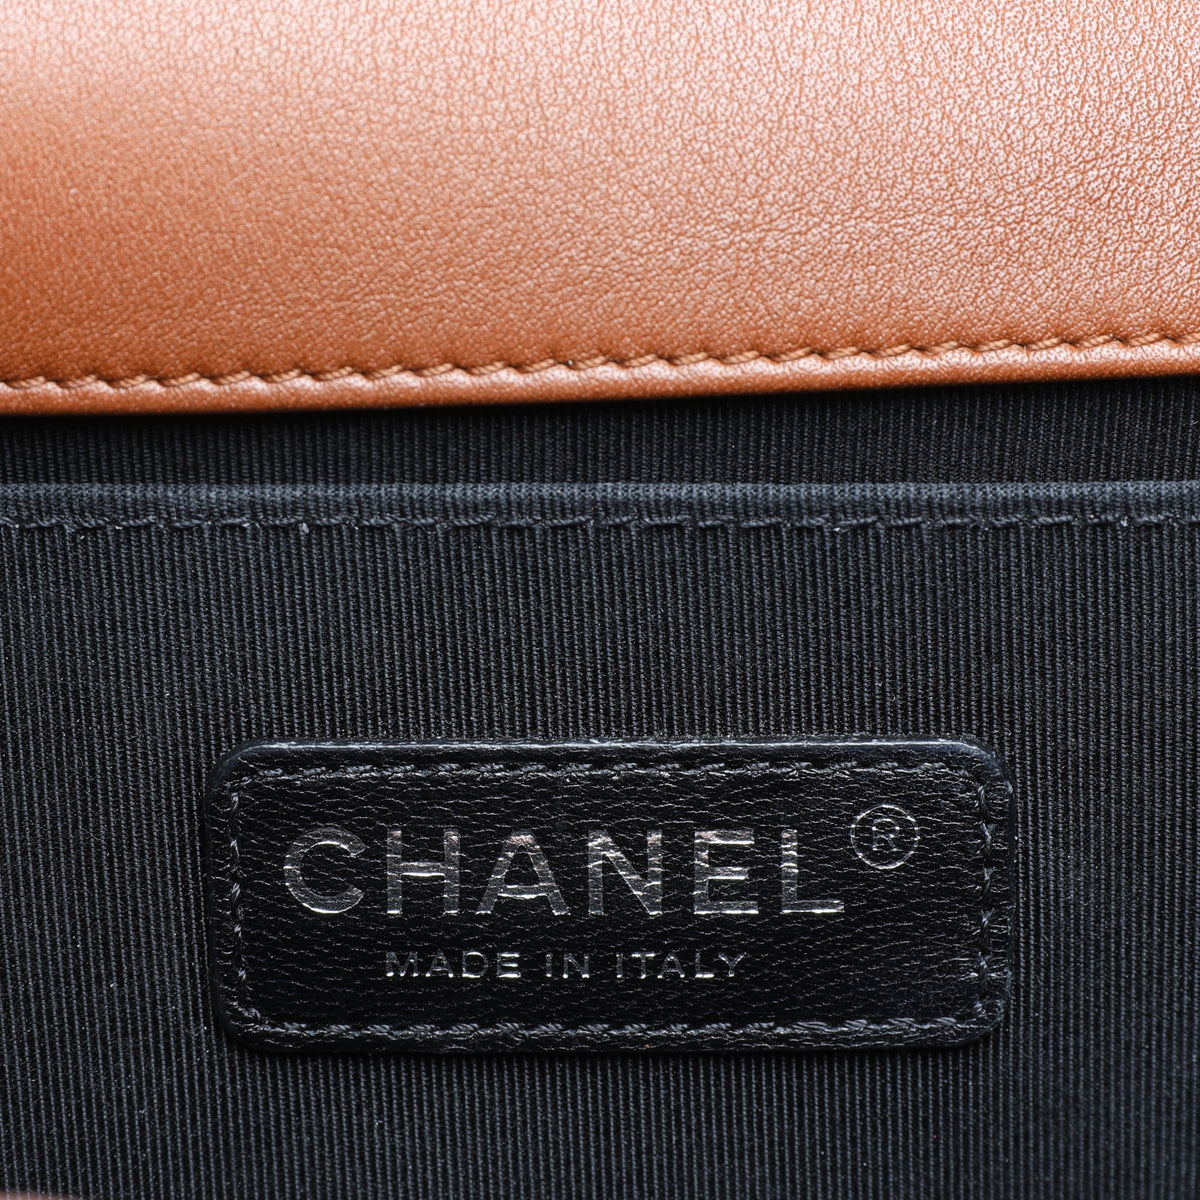 Chanel Brown Tooled Leather Cordoba Medium Boy Bag with Ruthenium Hardware